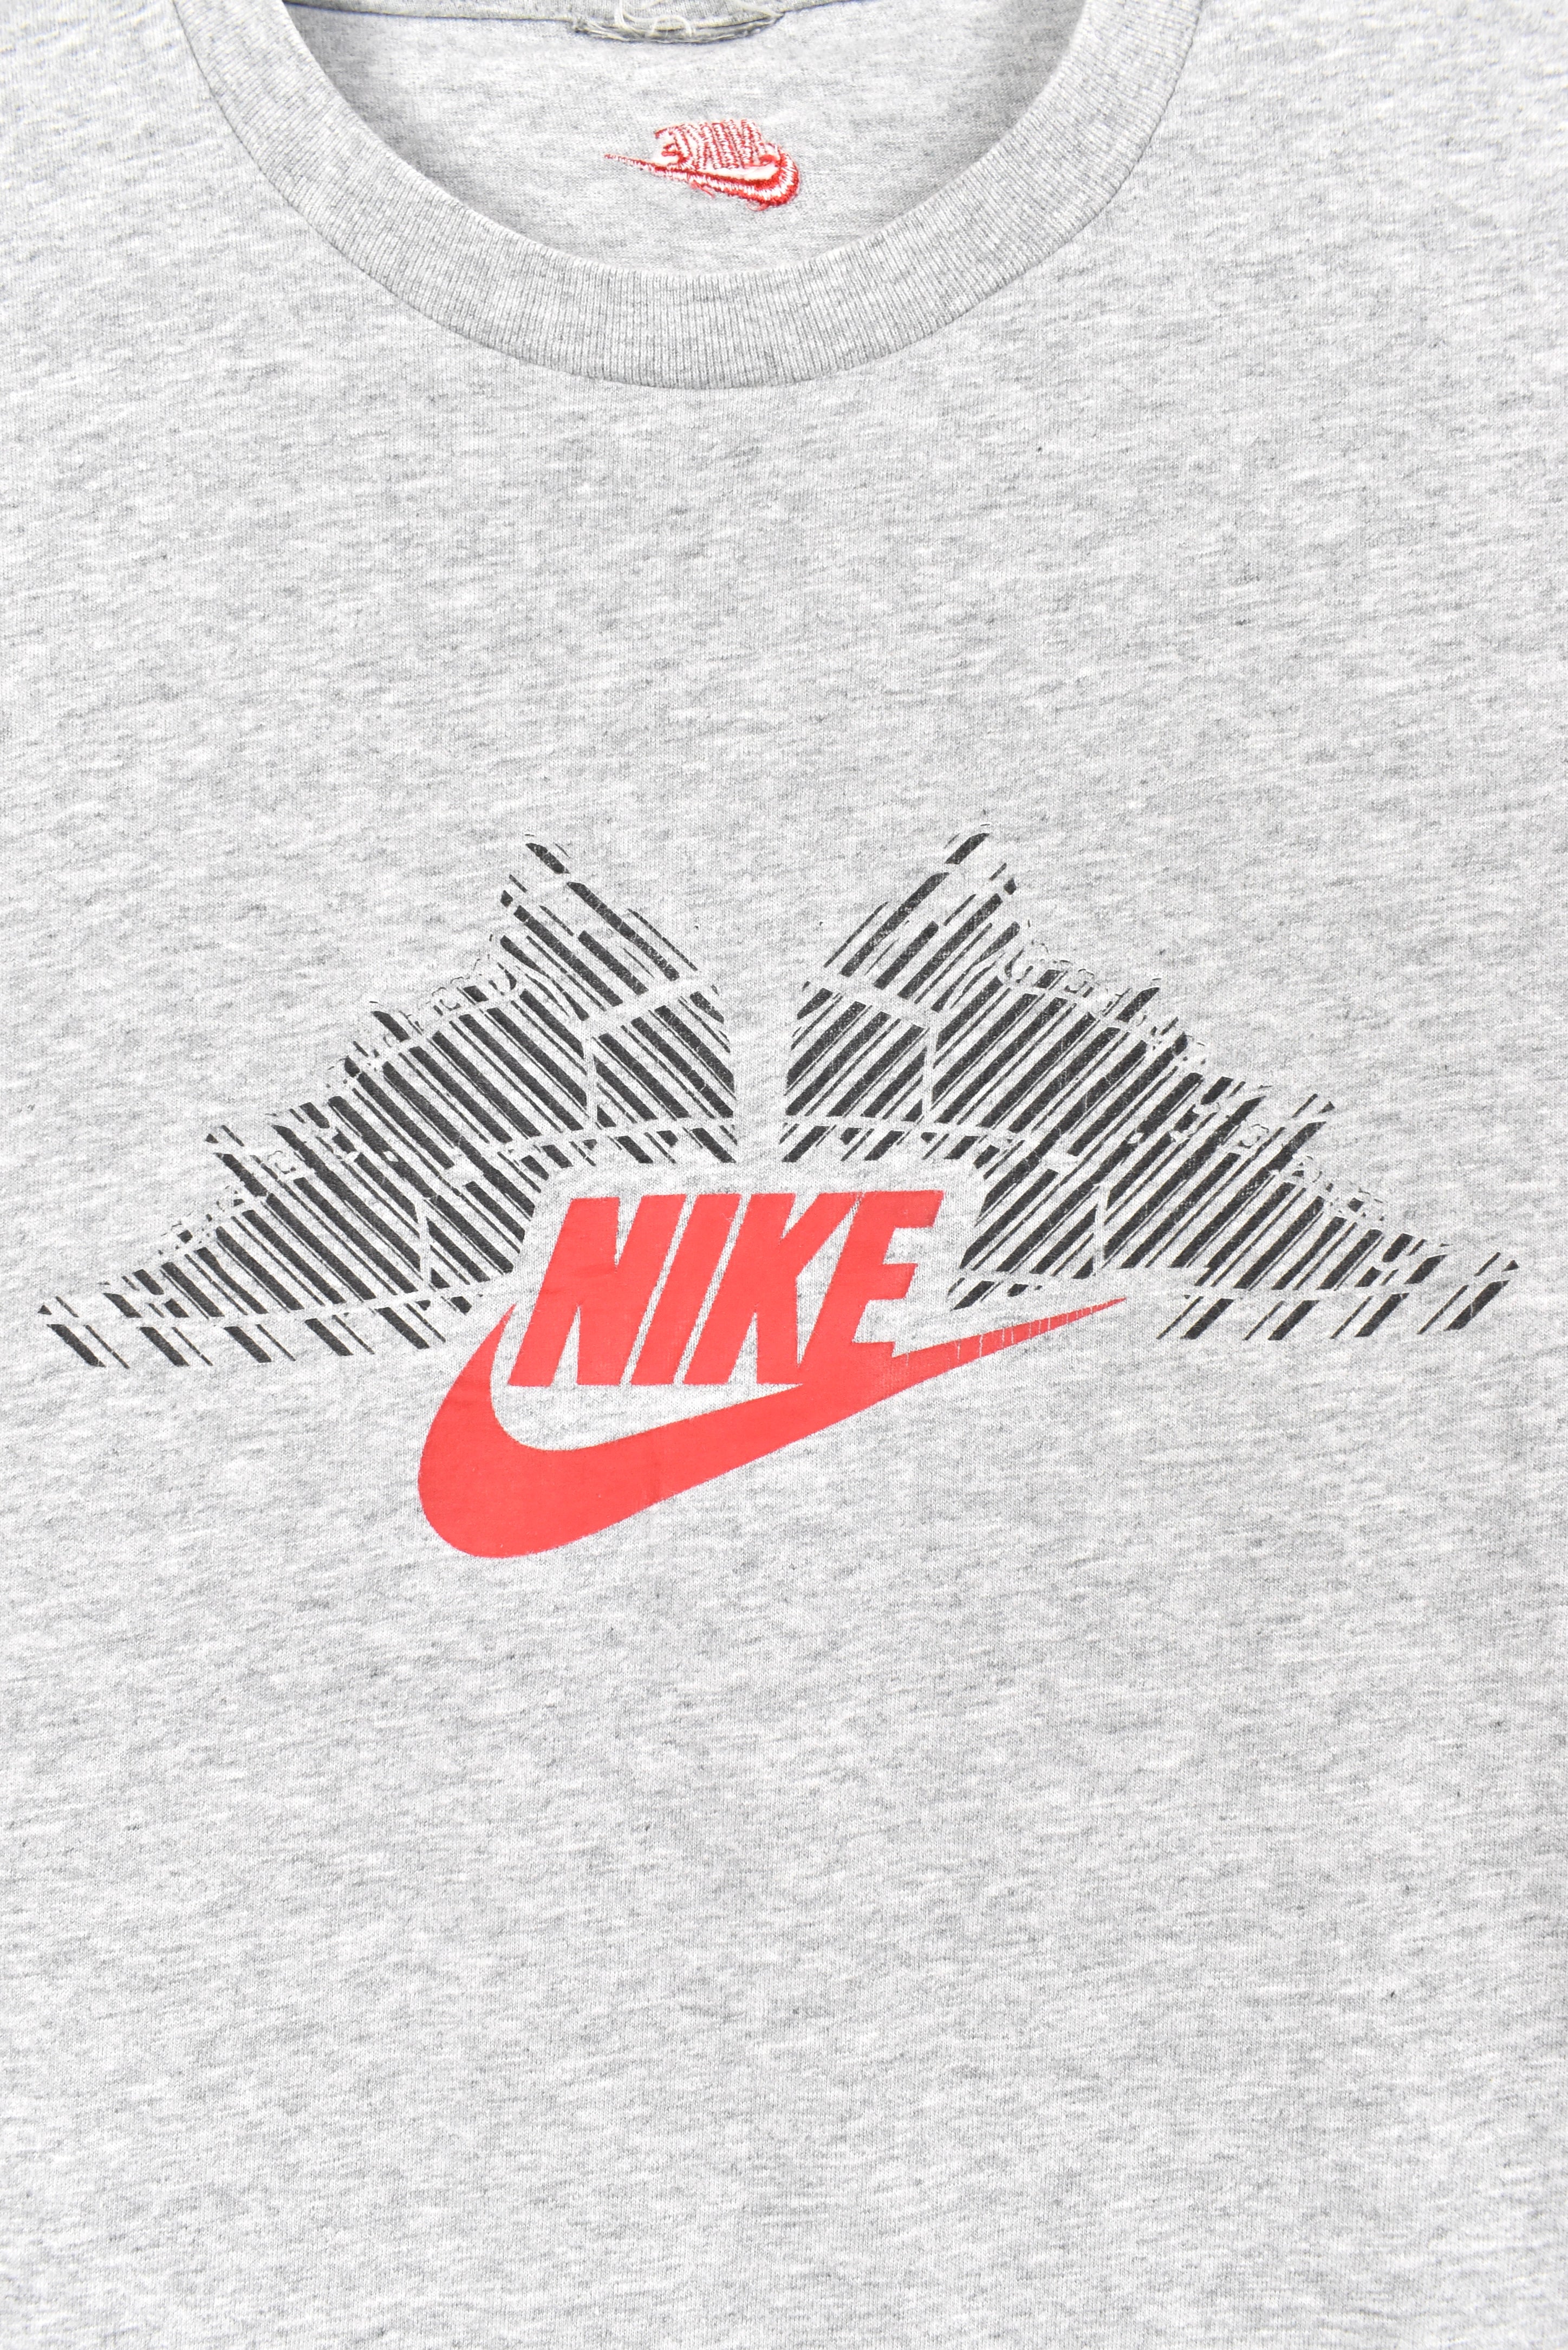 Vintage Nike shirt, grey graphic tee - AU L NIKE